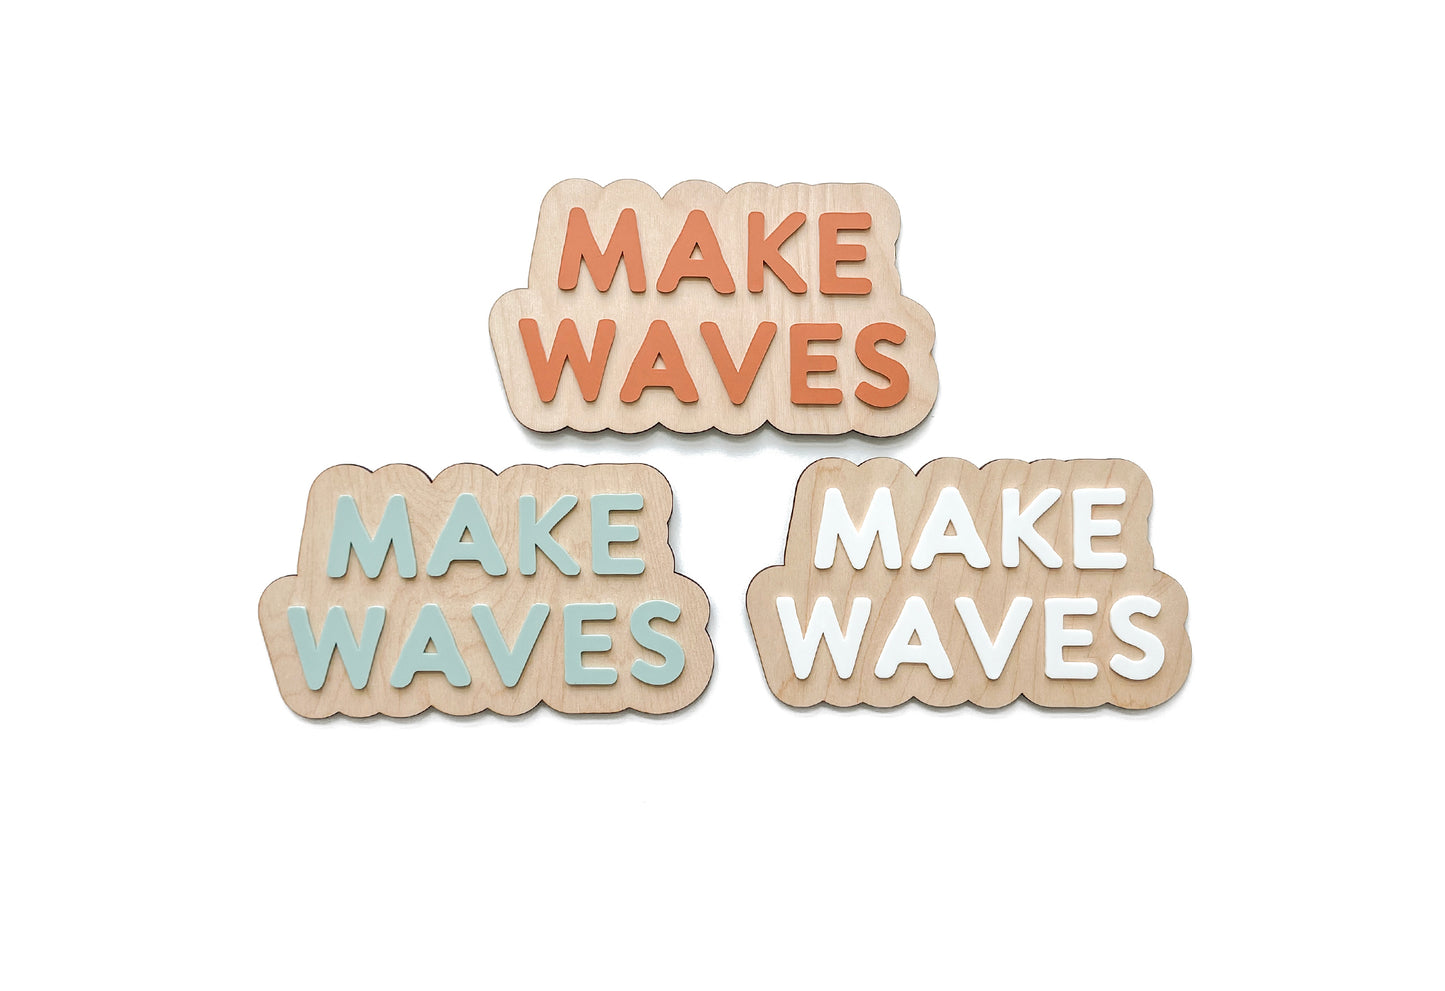 MAKE WAVES